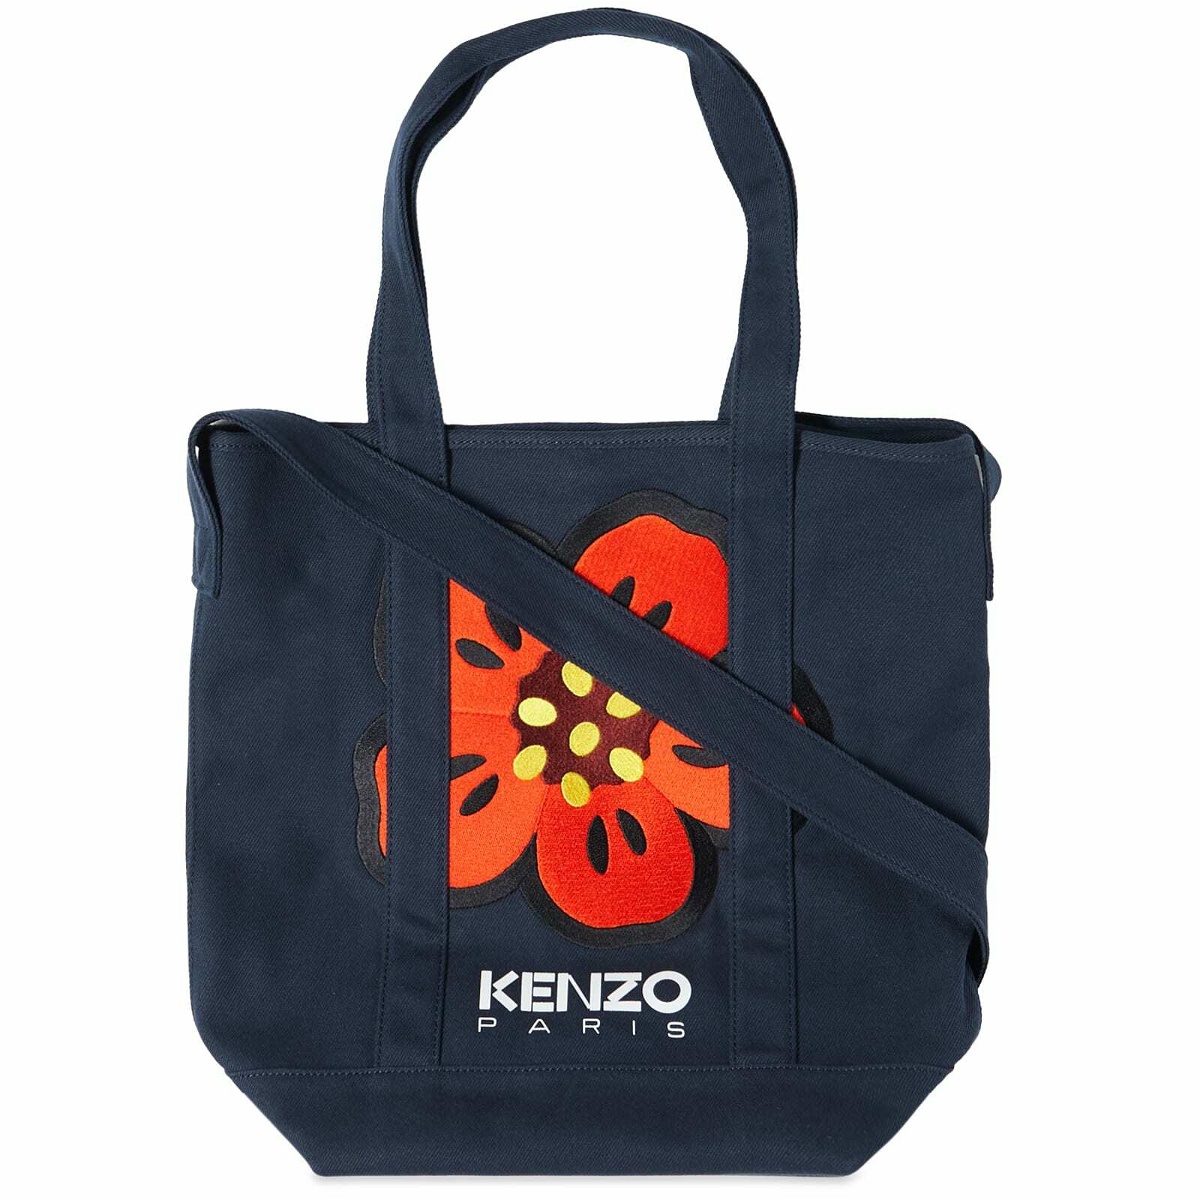 Kenzo Flower Logo Tote Bag in Navy Blue Kenzo